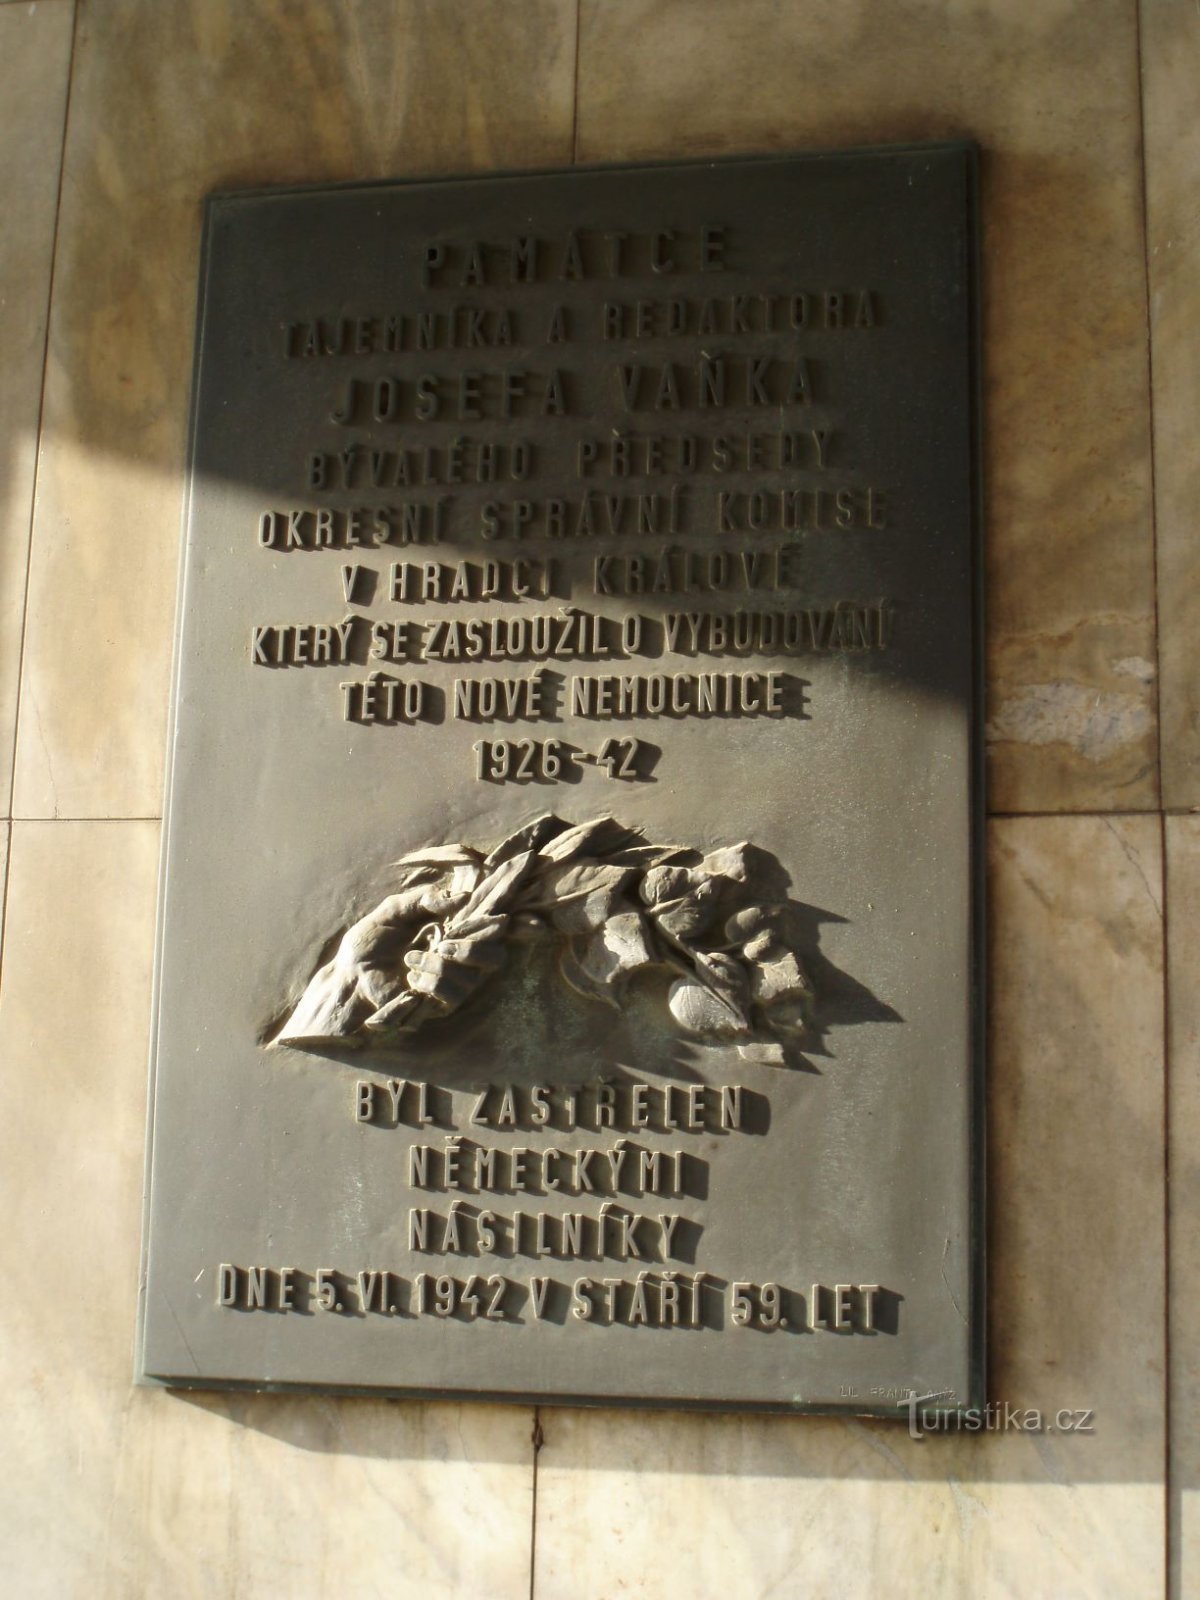 Targhe commemorative presso l'ospedale universitario di Hradec Králové (29.11.2011 novembre XNUMX)